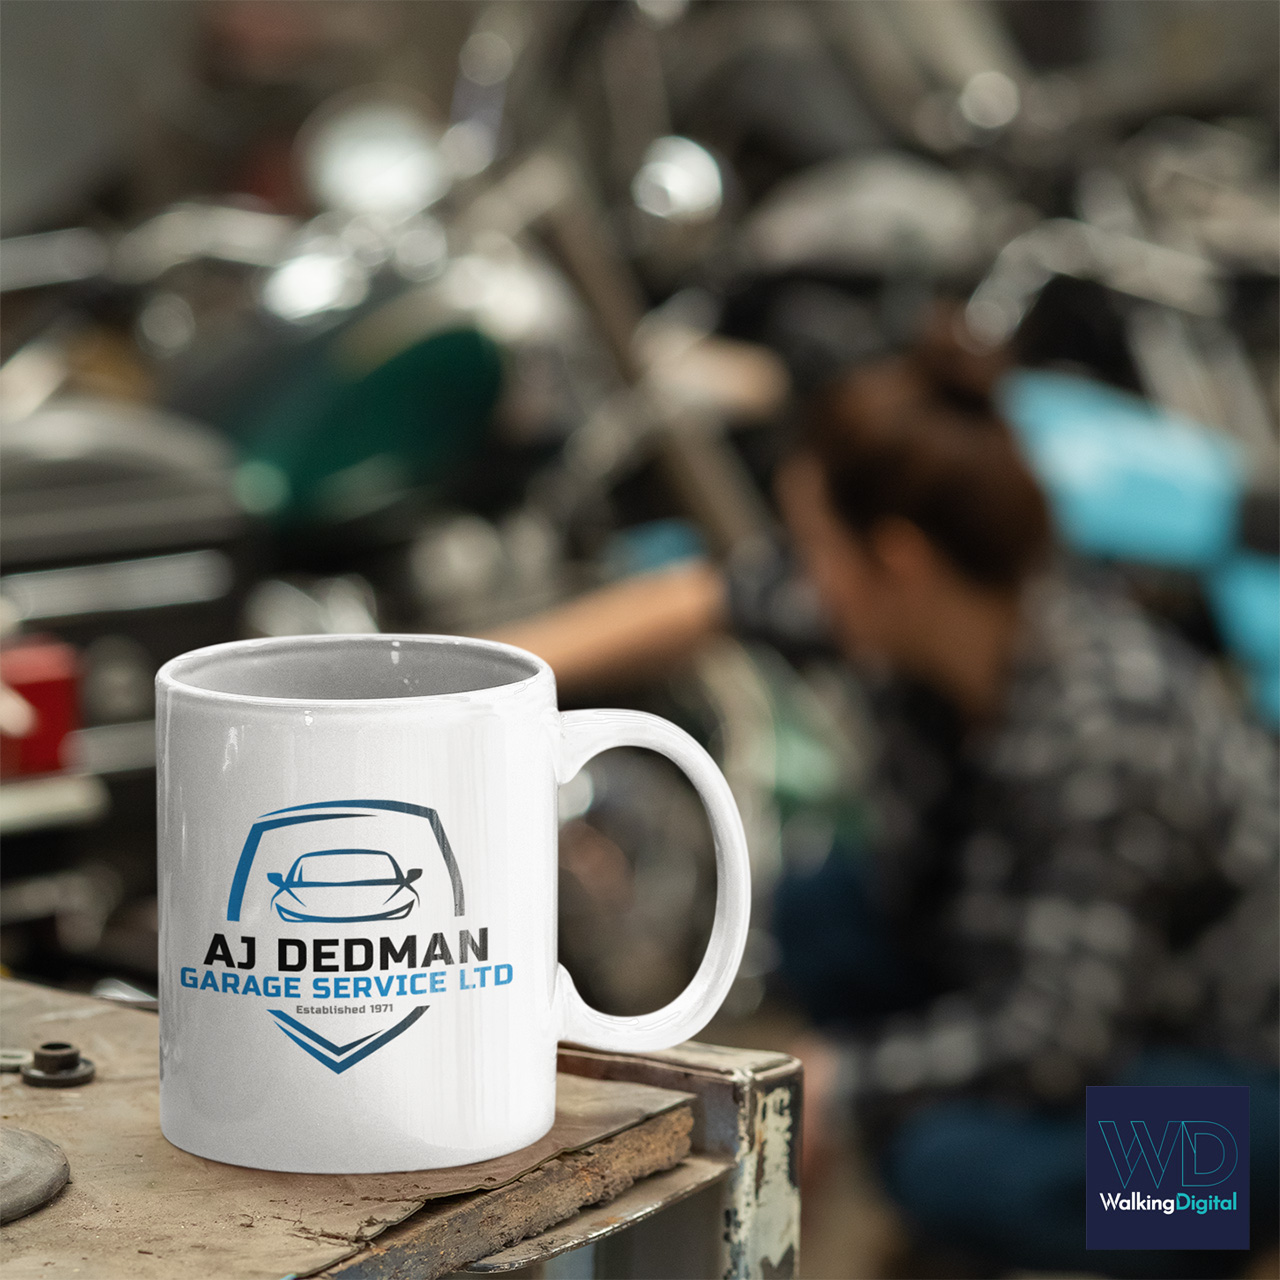 AJ Dedmans Garage Services branding on a coffee mug in a garage